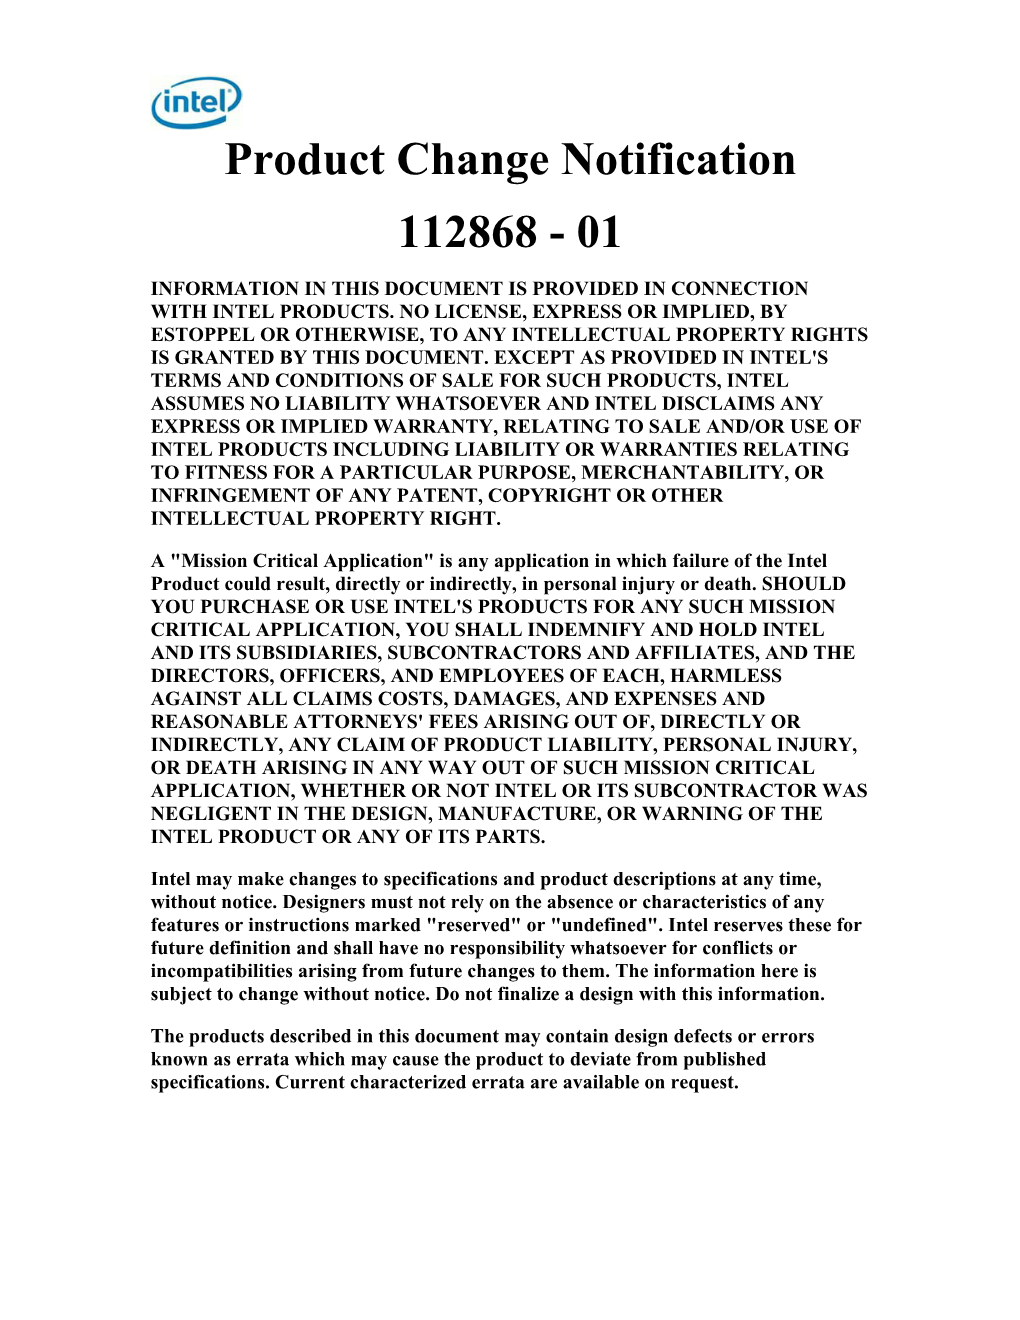 Product Change Notification 112868